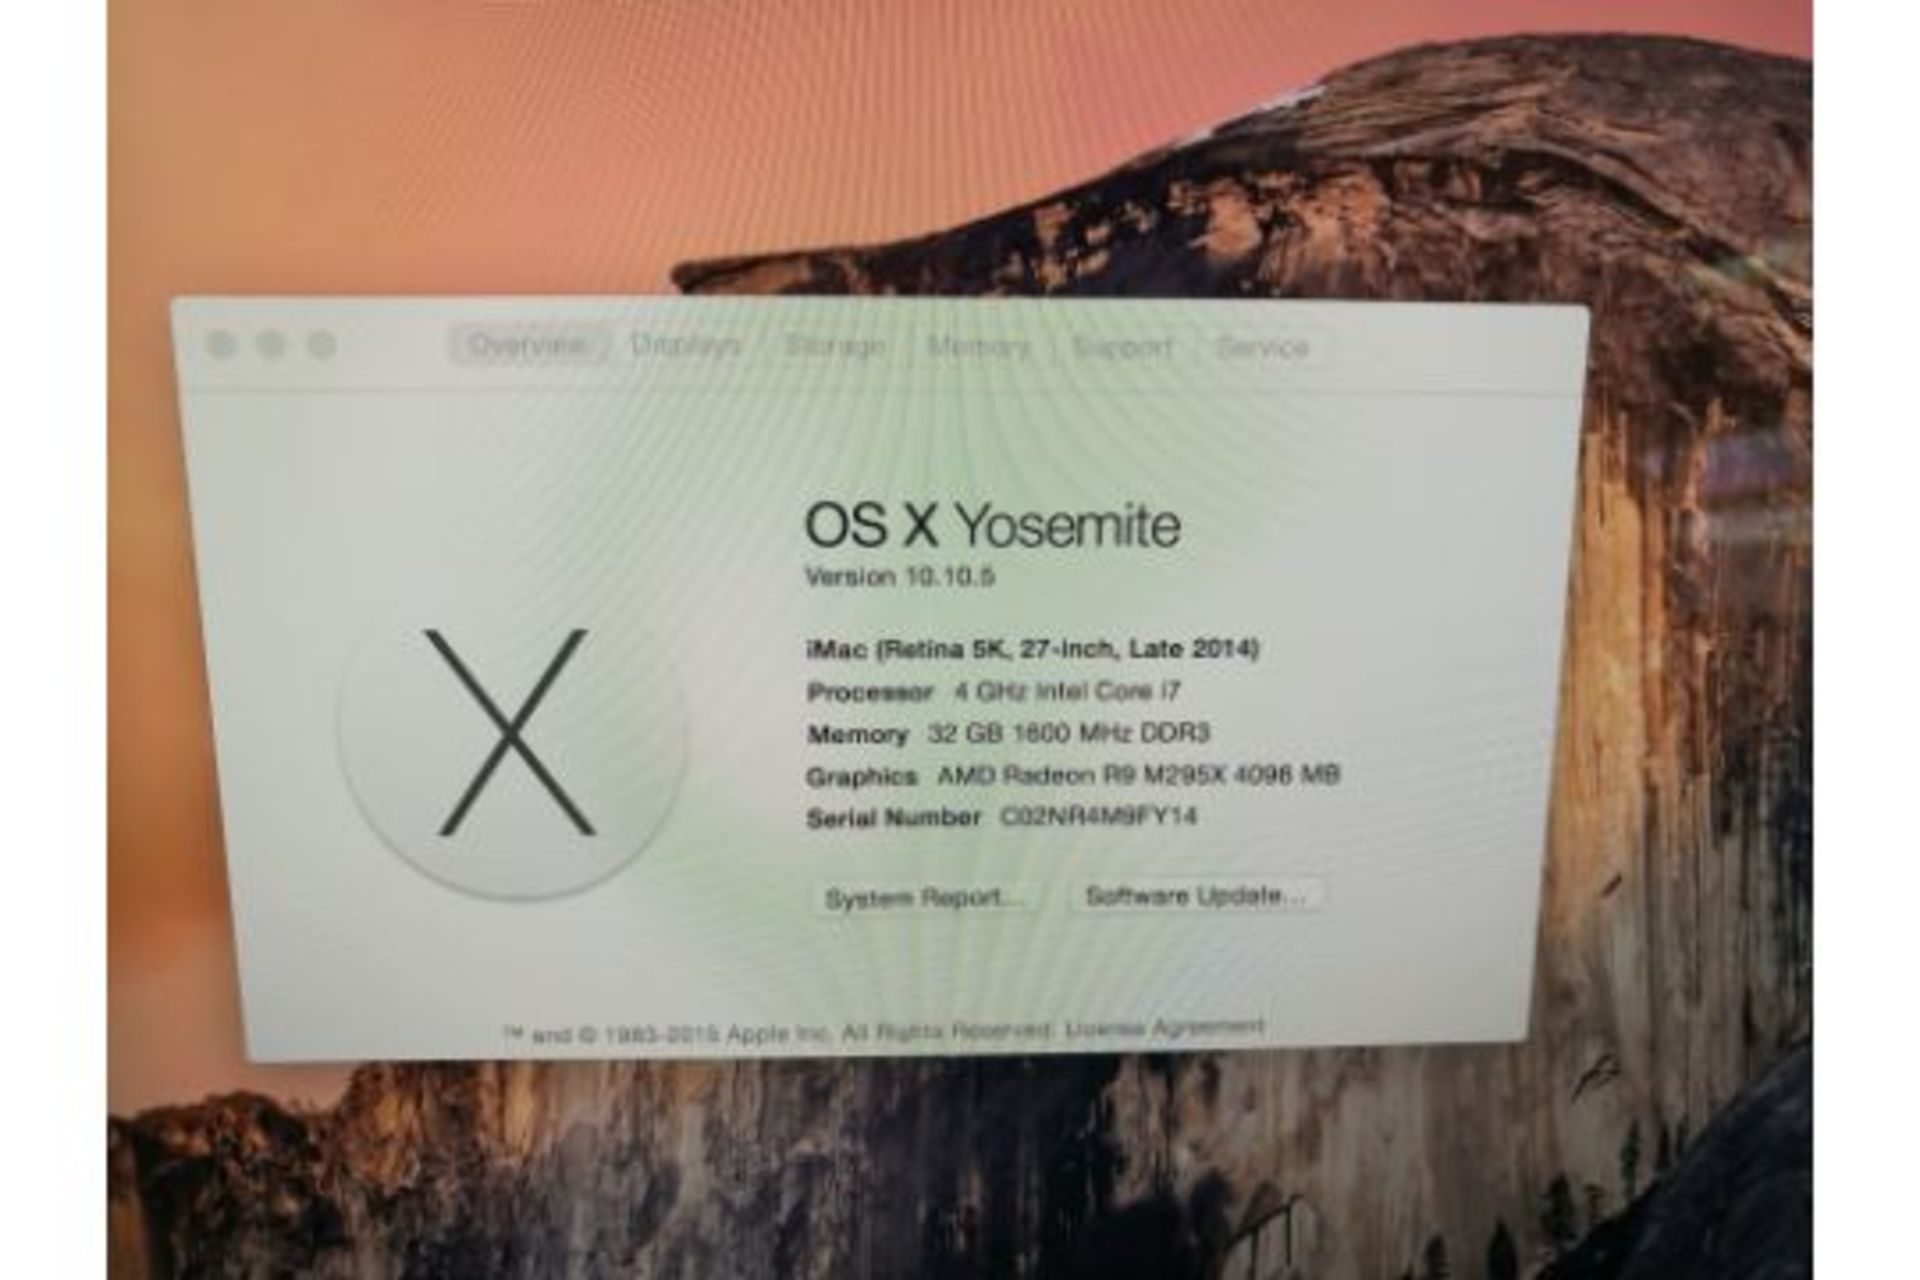 Apple iMac (Retina 5K, 27-inch, Late 2014) - Image 2 of 5